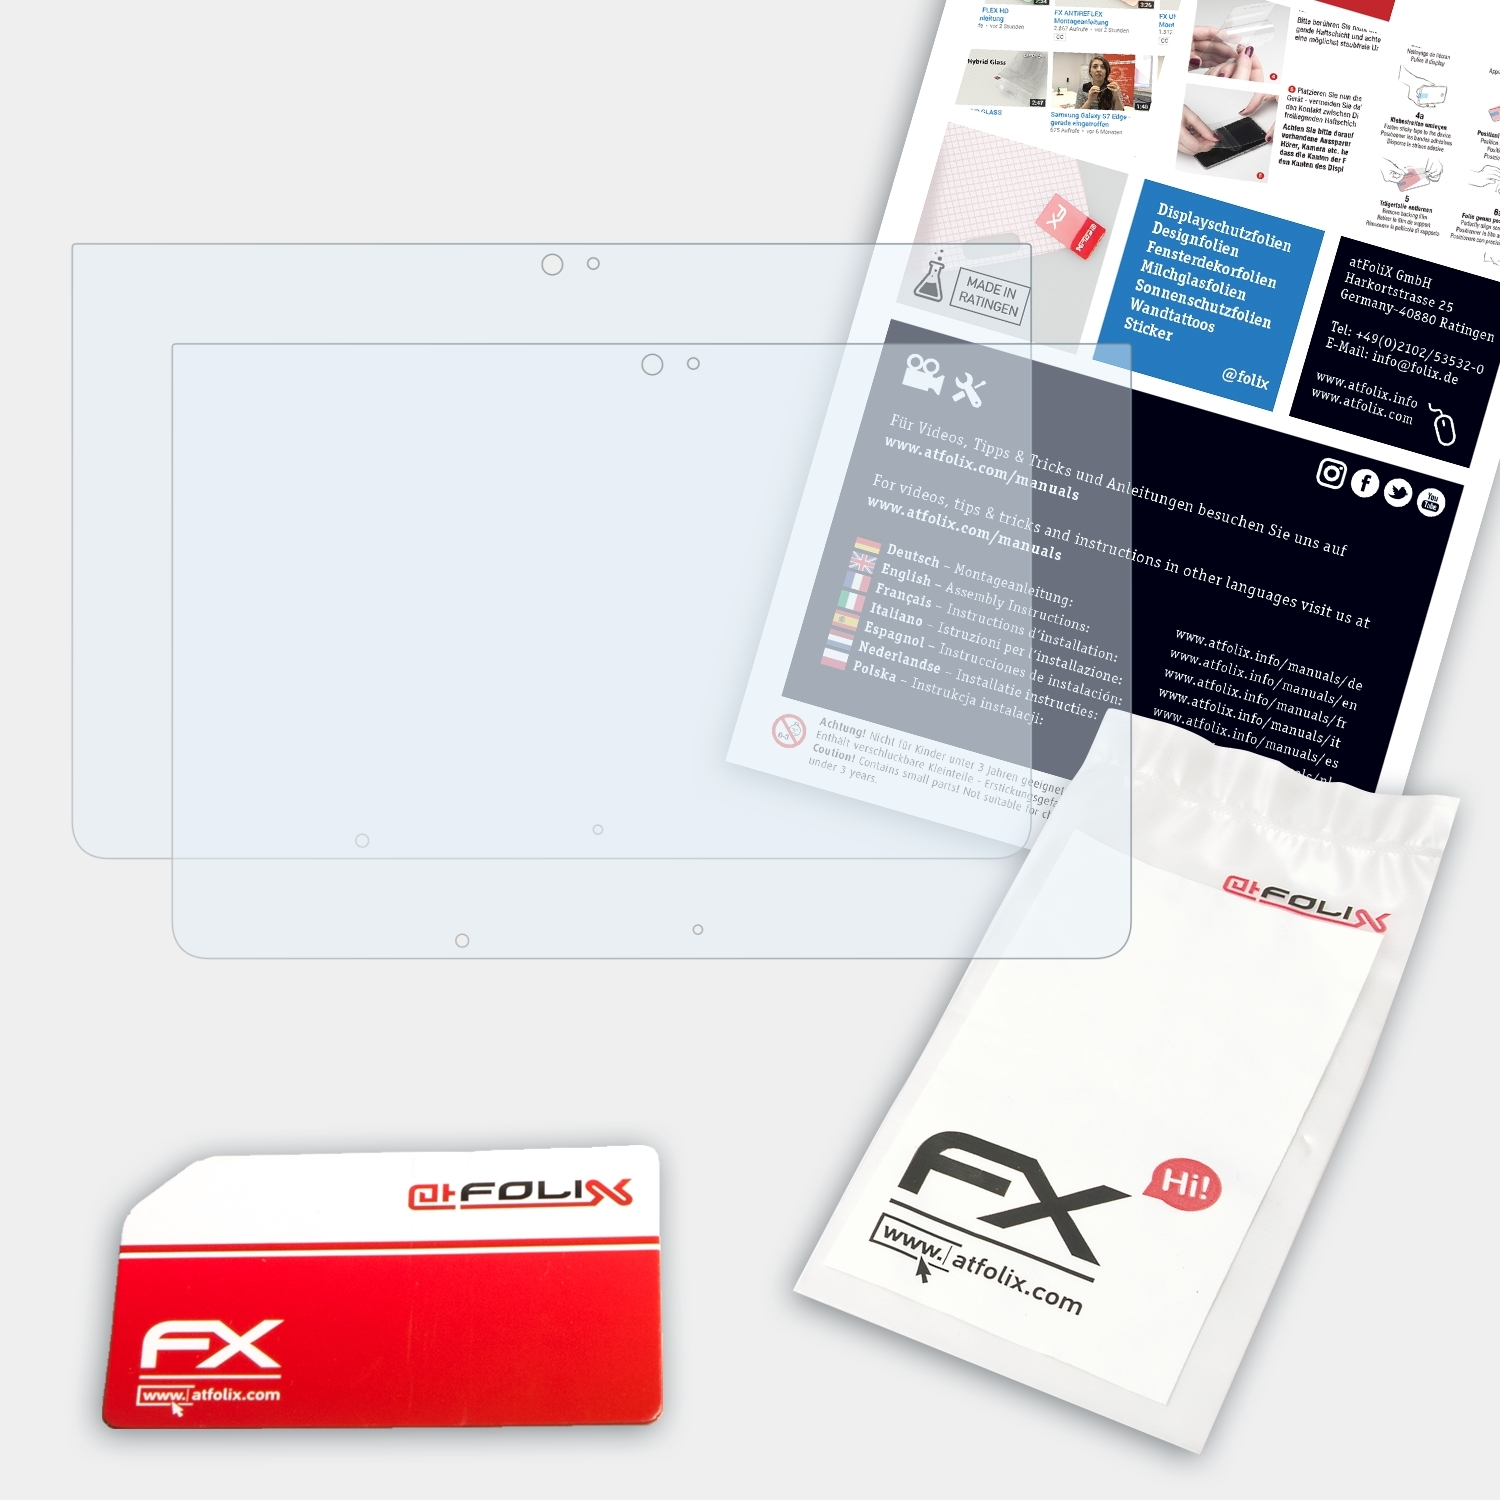 Displayschutz(für 2x FX-Clear ATFOLIX Q775) Stylistic Fujitsu